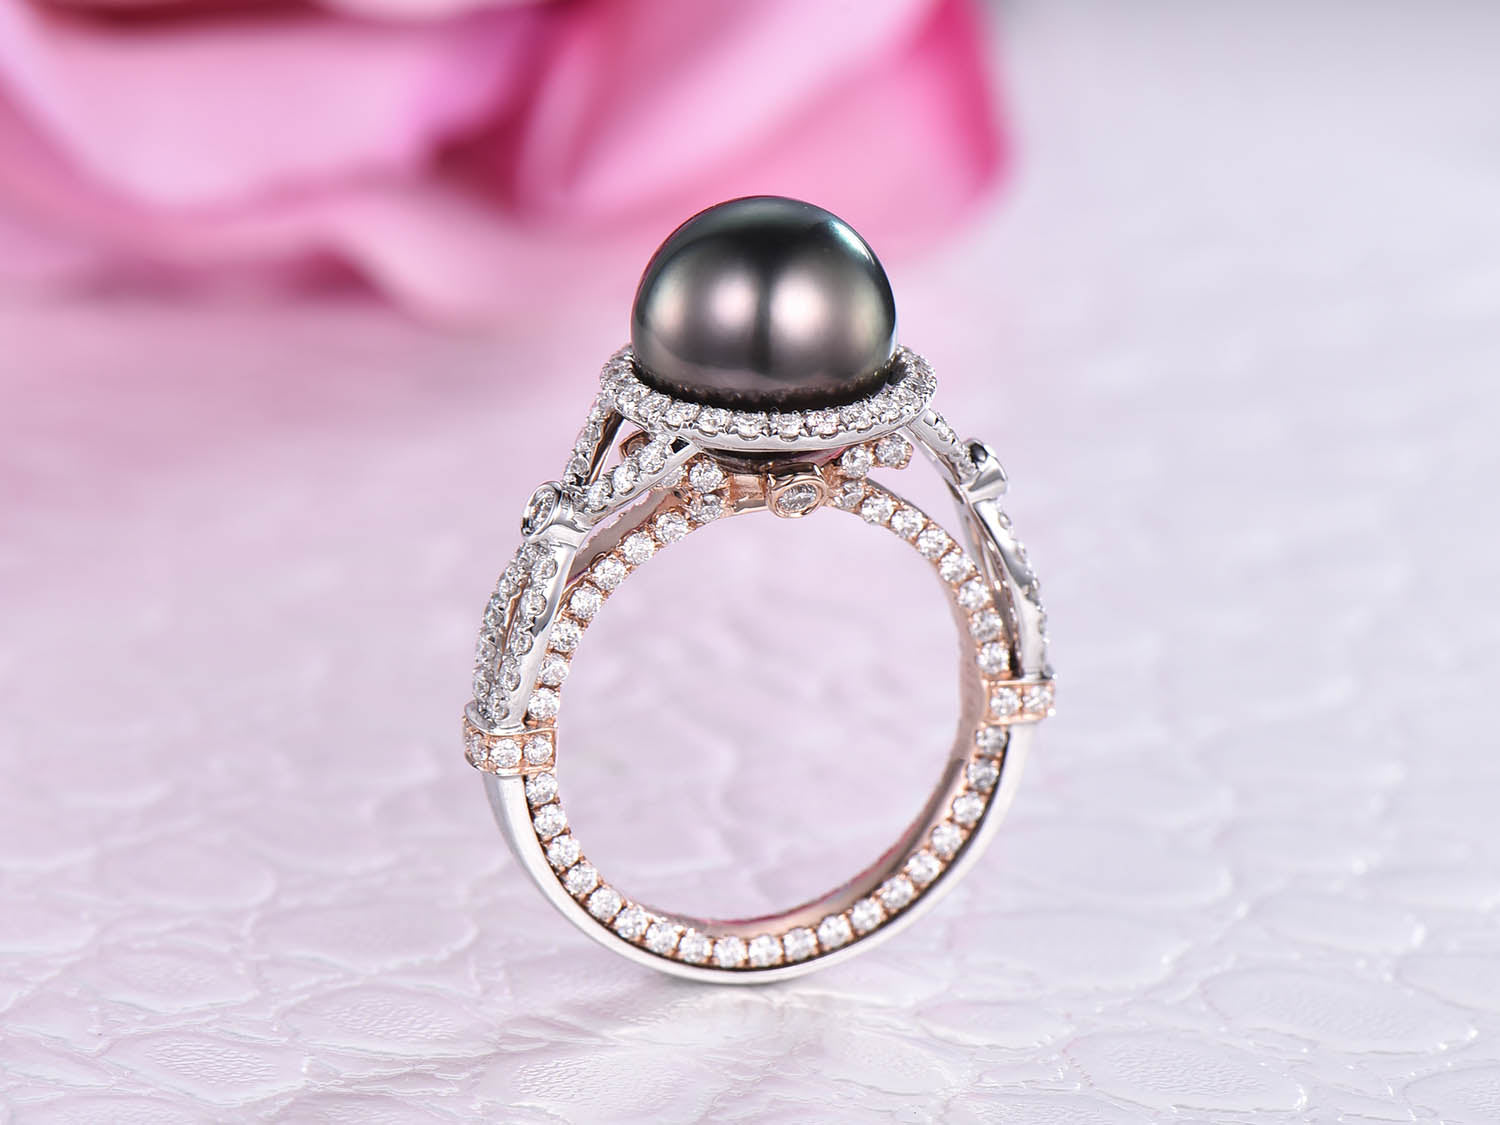 Reserved for Karmen: Custom Tahitian Pearl Engagement Ring Two Tones